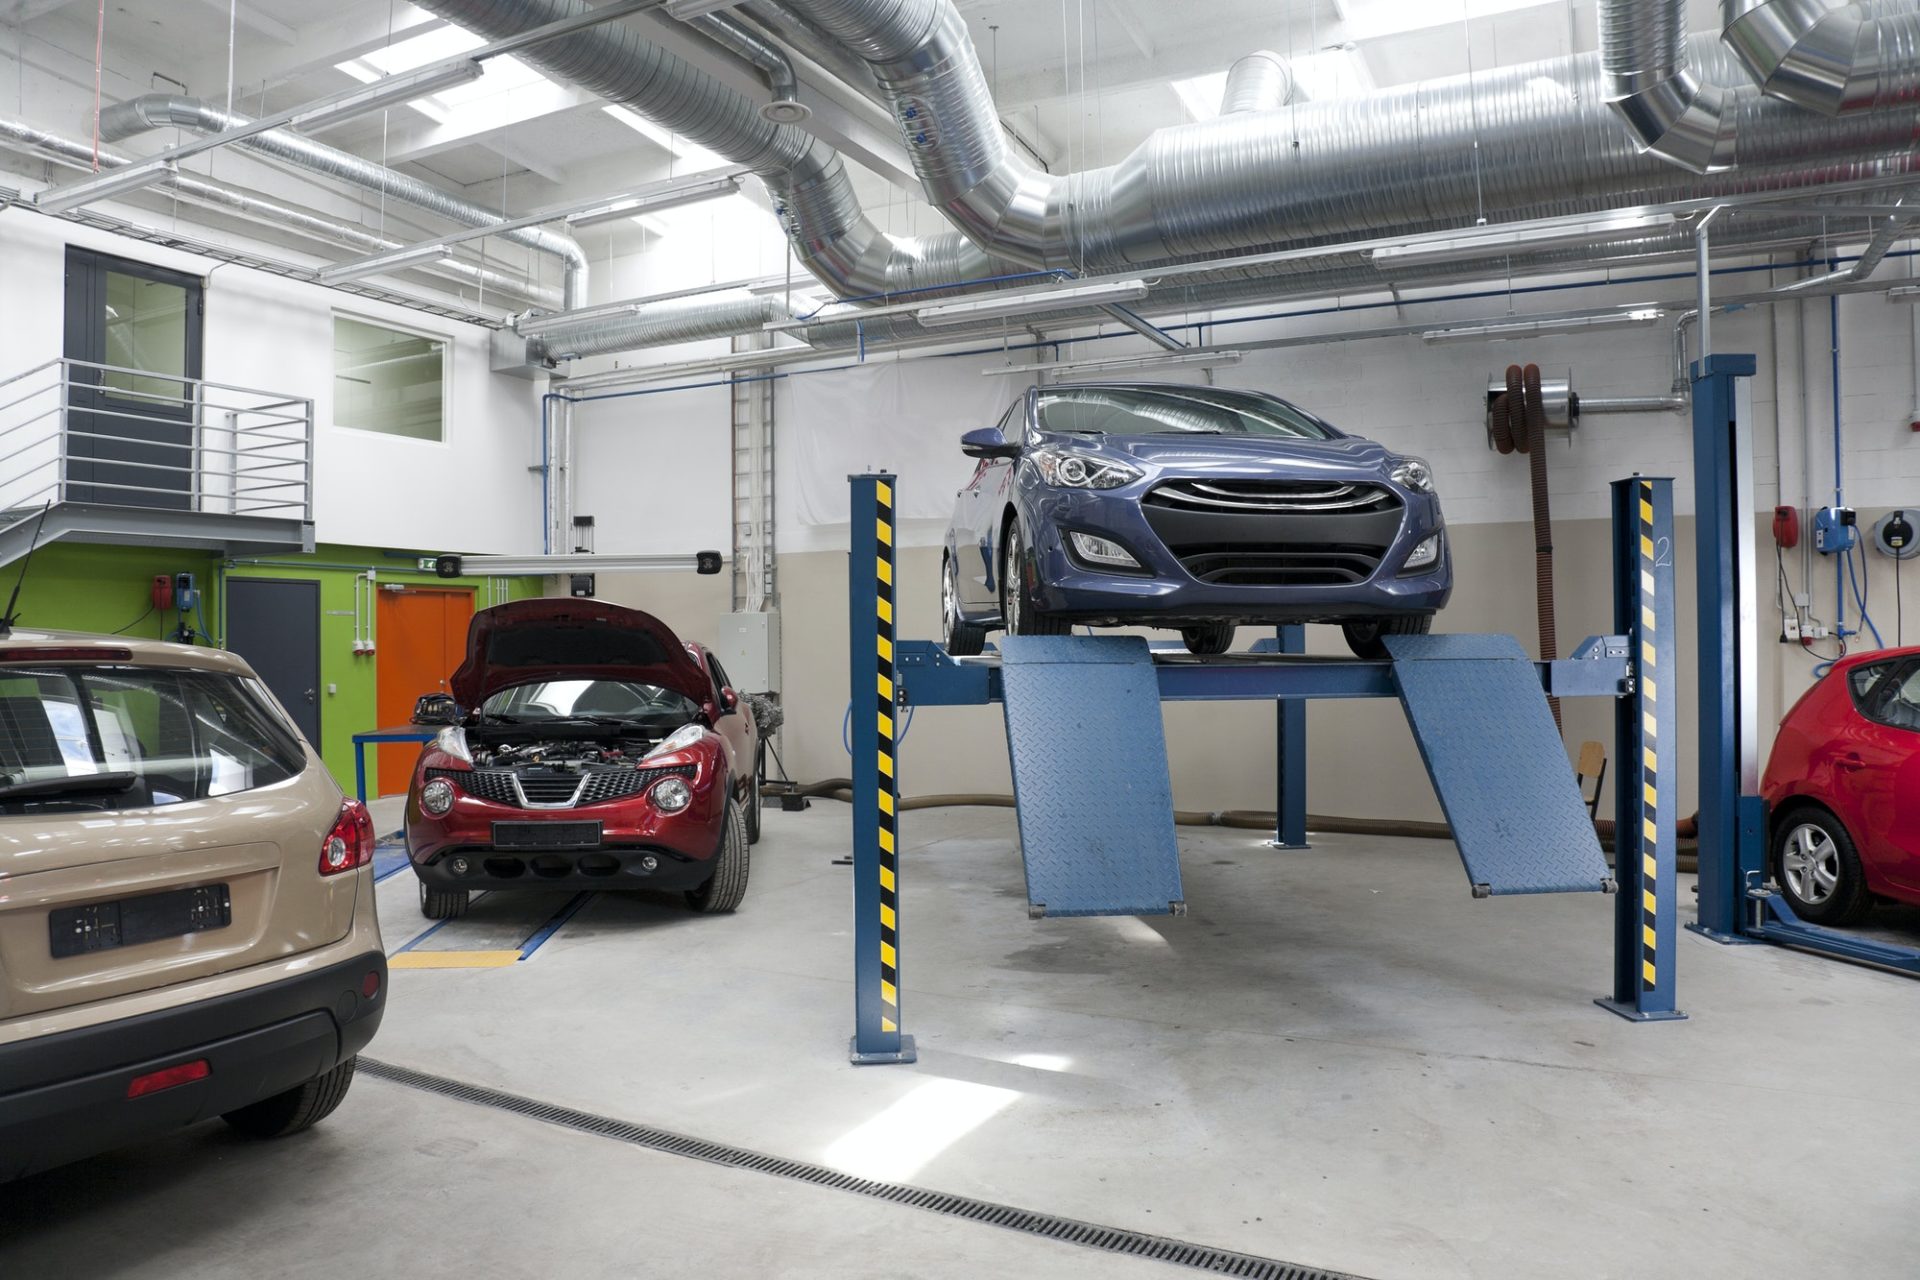 Cars in a large repair workshop or garage.